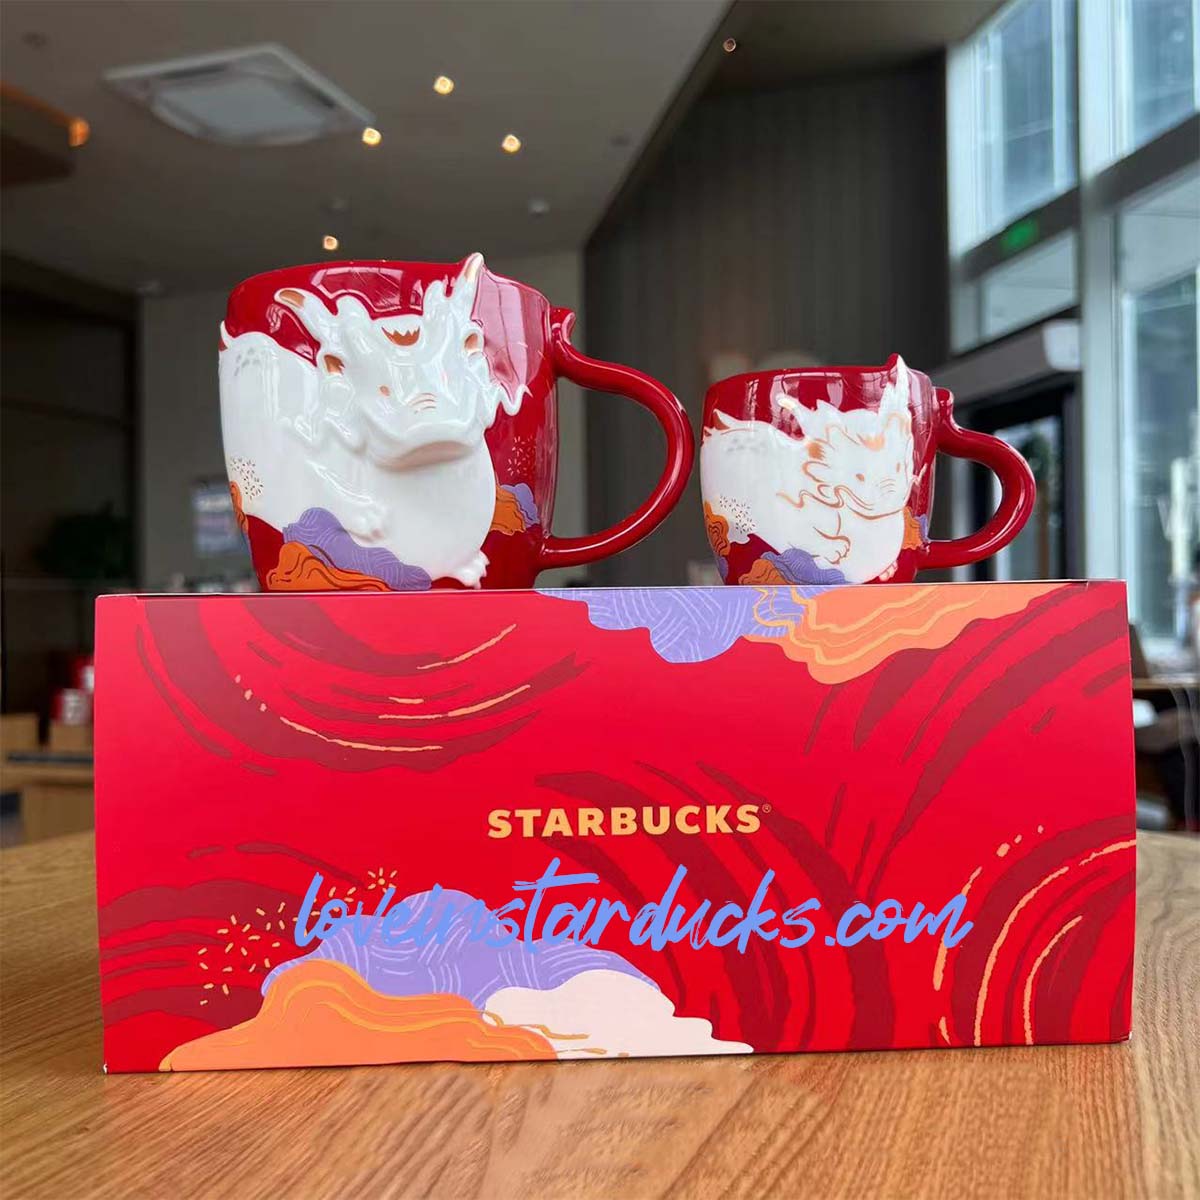 Starbucks Leopard Birthday Gift Box, Starbucks Cup Gift Set